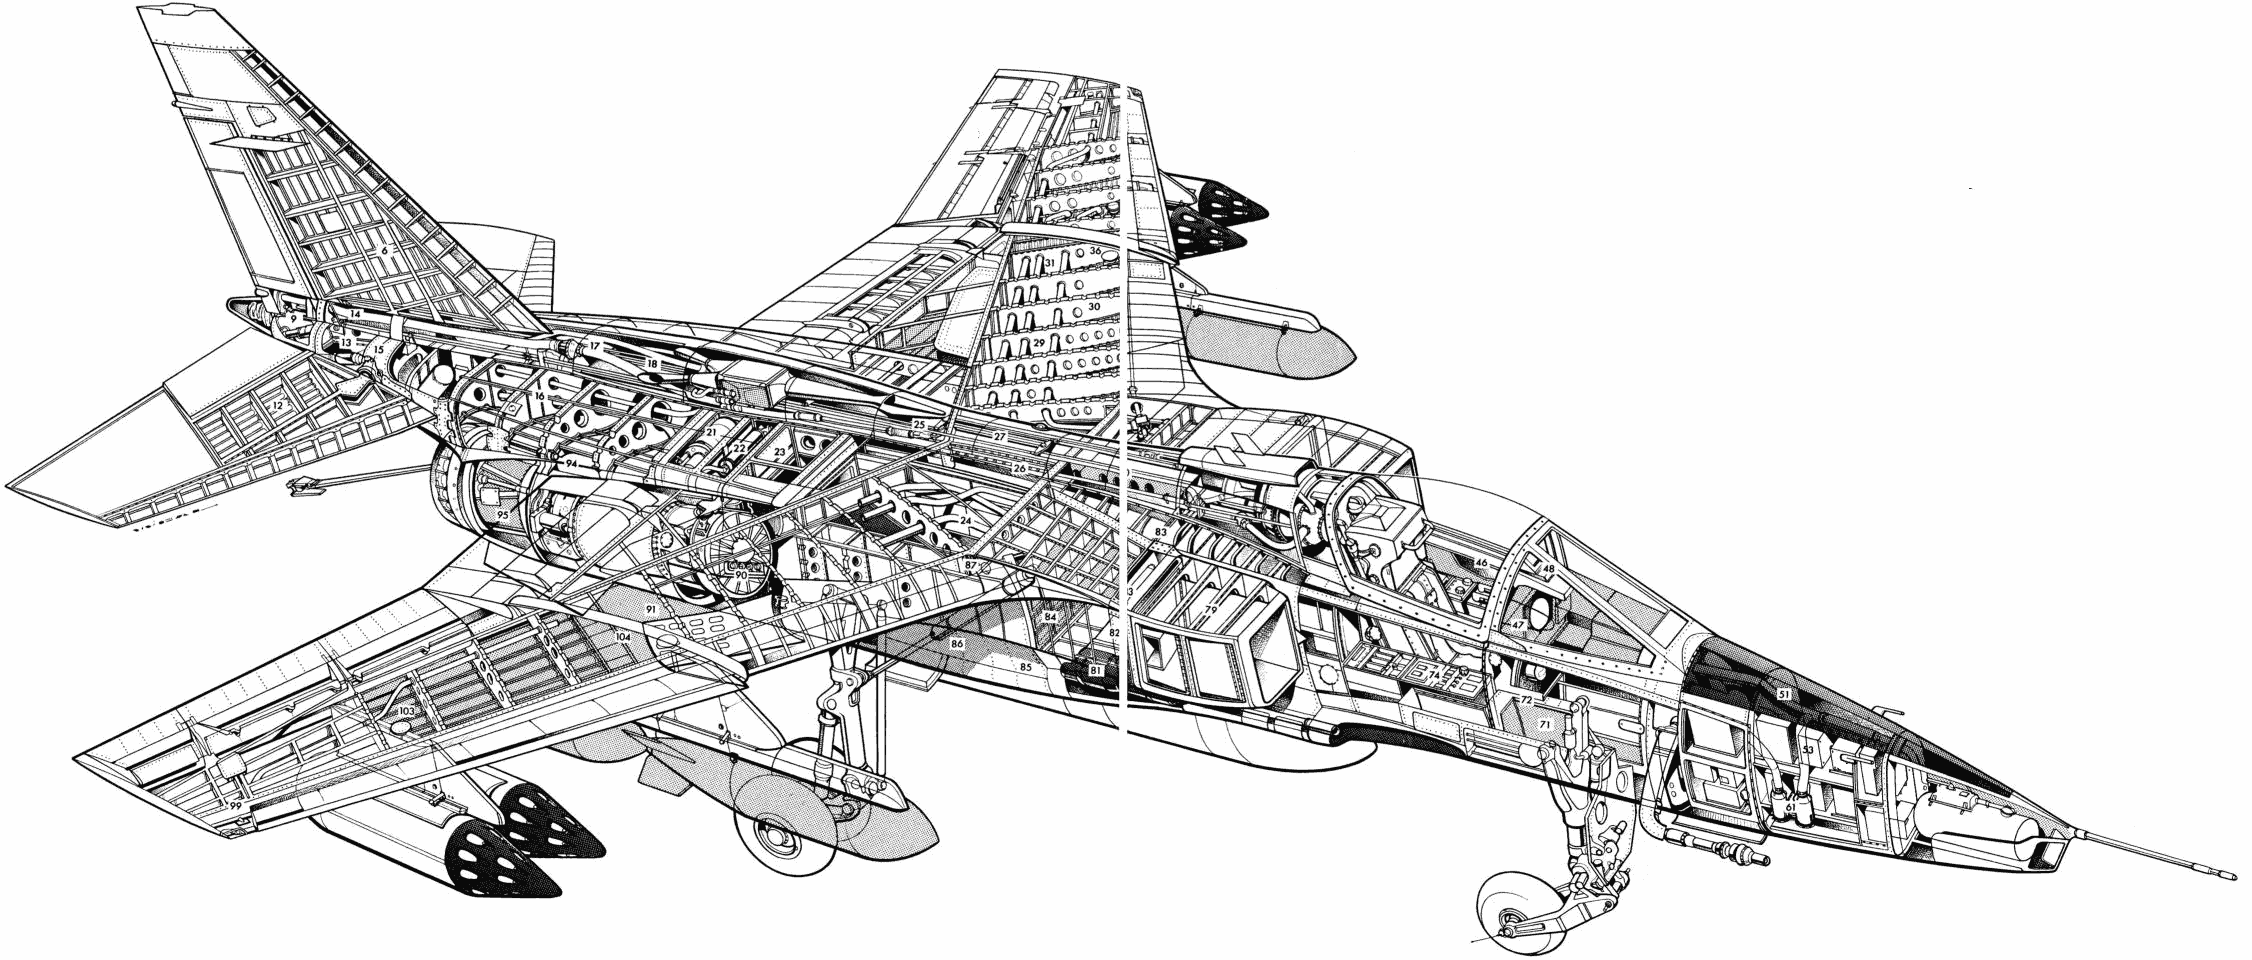 SEPECAT Jaguar cutaway drawing